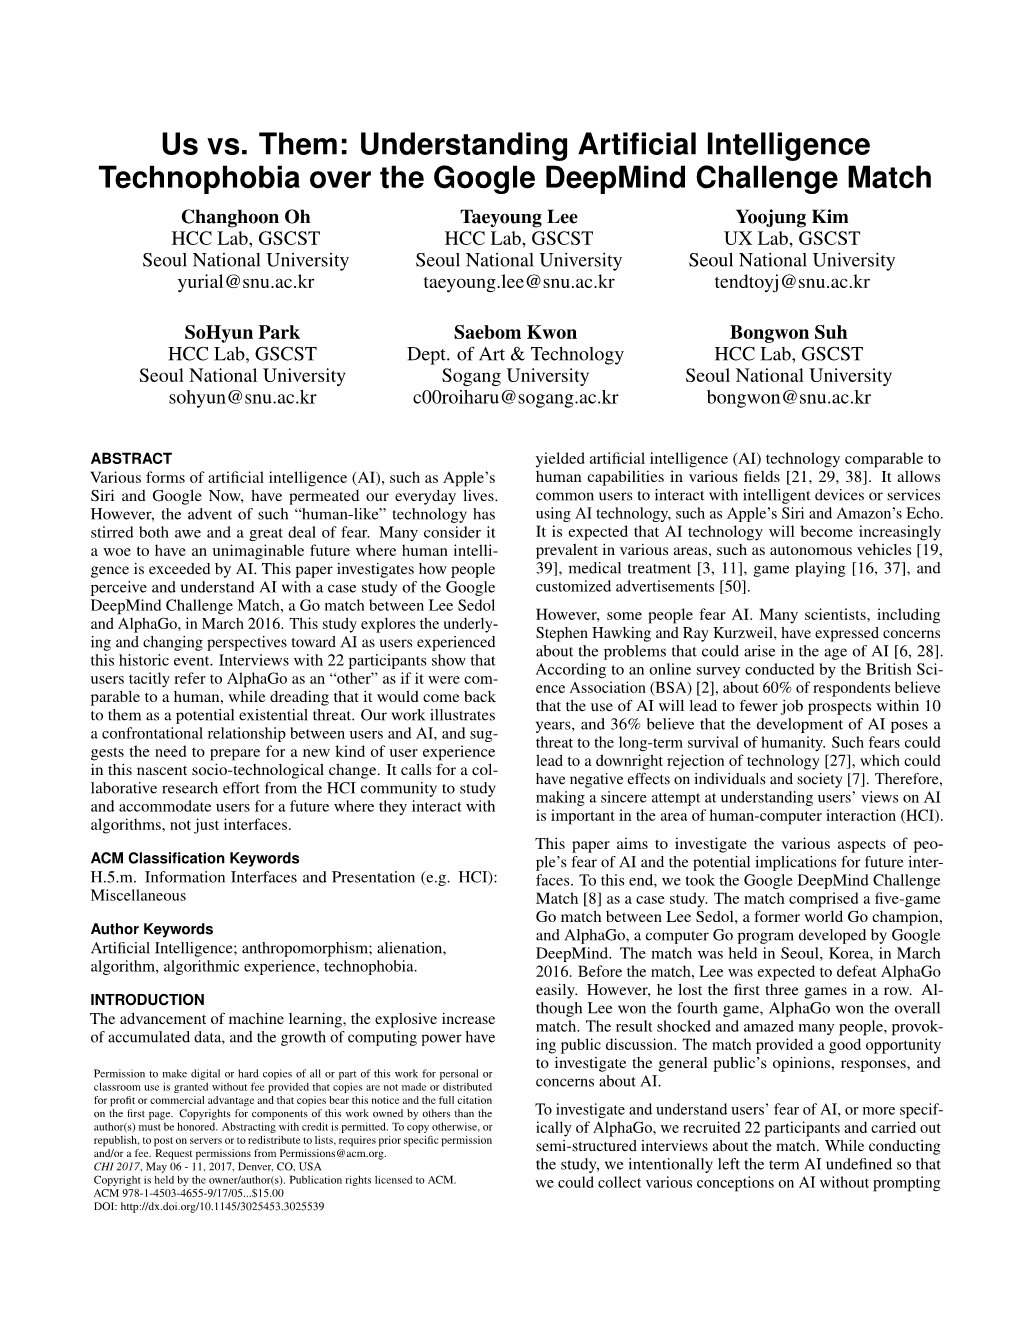 Us Vs. Them: Understanding Artificial Intelligence Technophobia Over the Google Deepmind Challenge Match